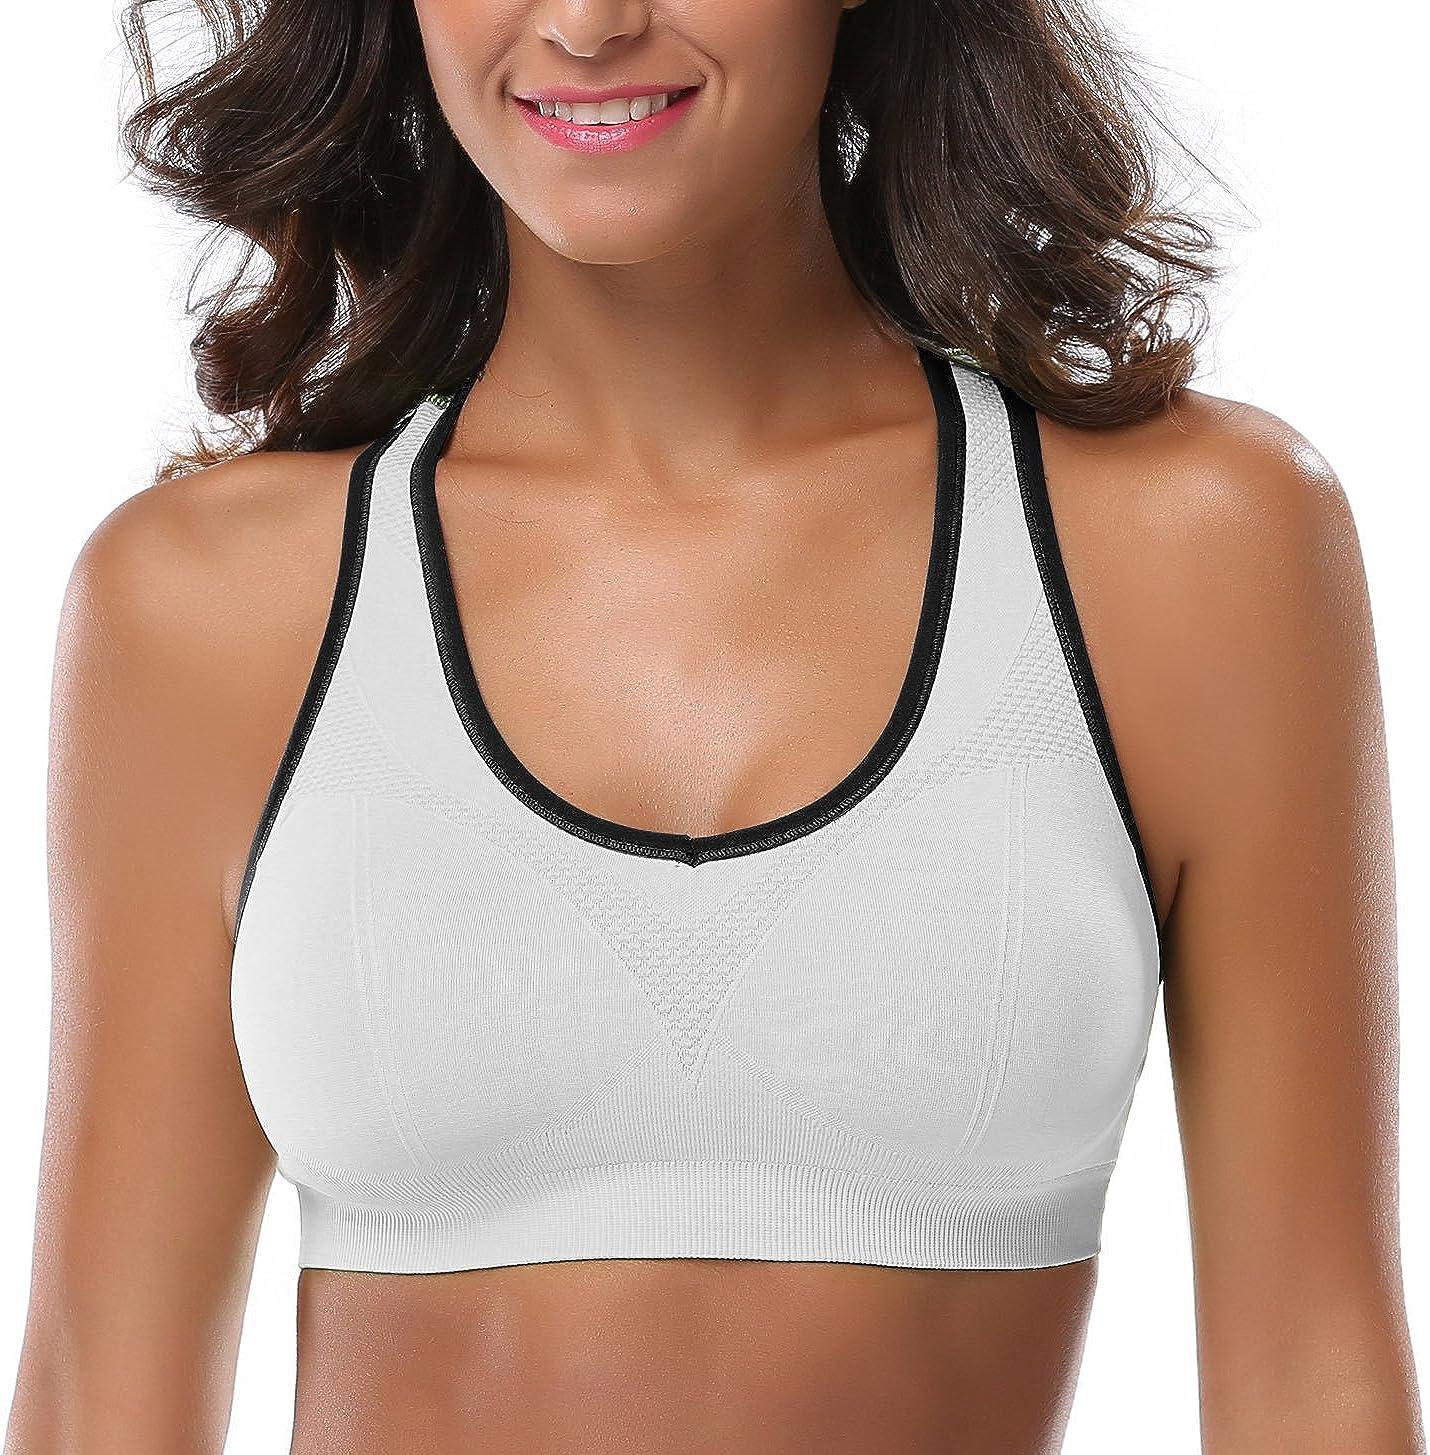 MIRITY Women Racerback Sports Bras - High Impact Workout Gym Activewear Bra  Medium Black Grey White